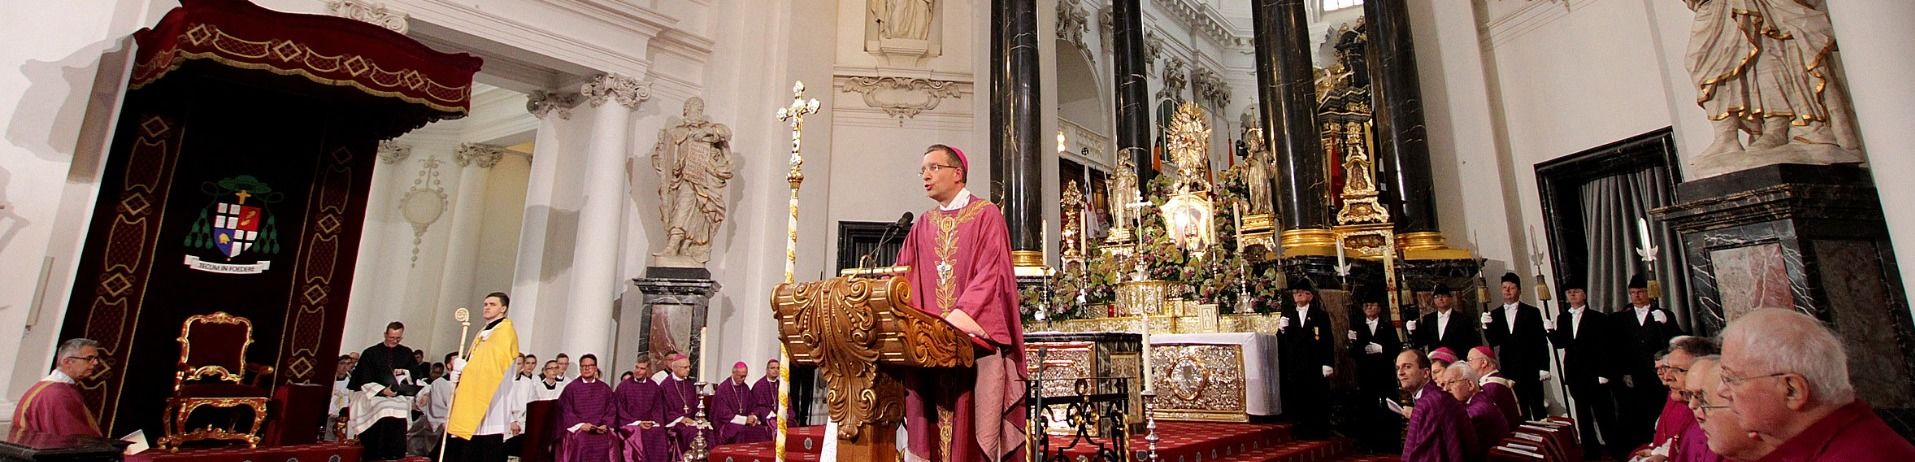 Bischof Dr. Michael Gerber: Feierliche Amtseinführung